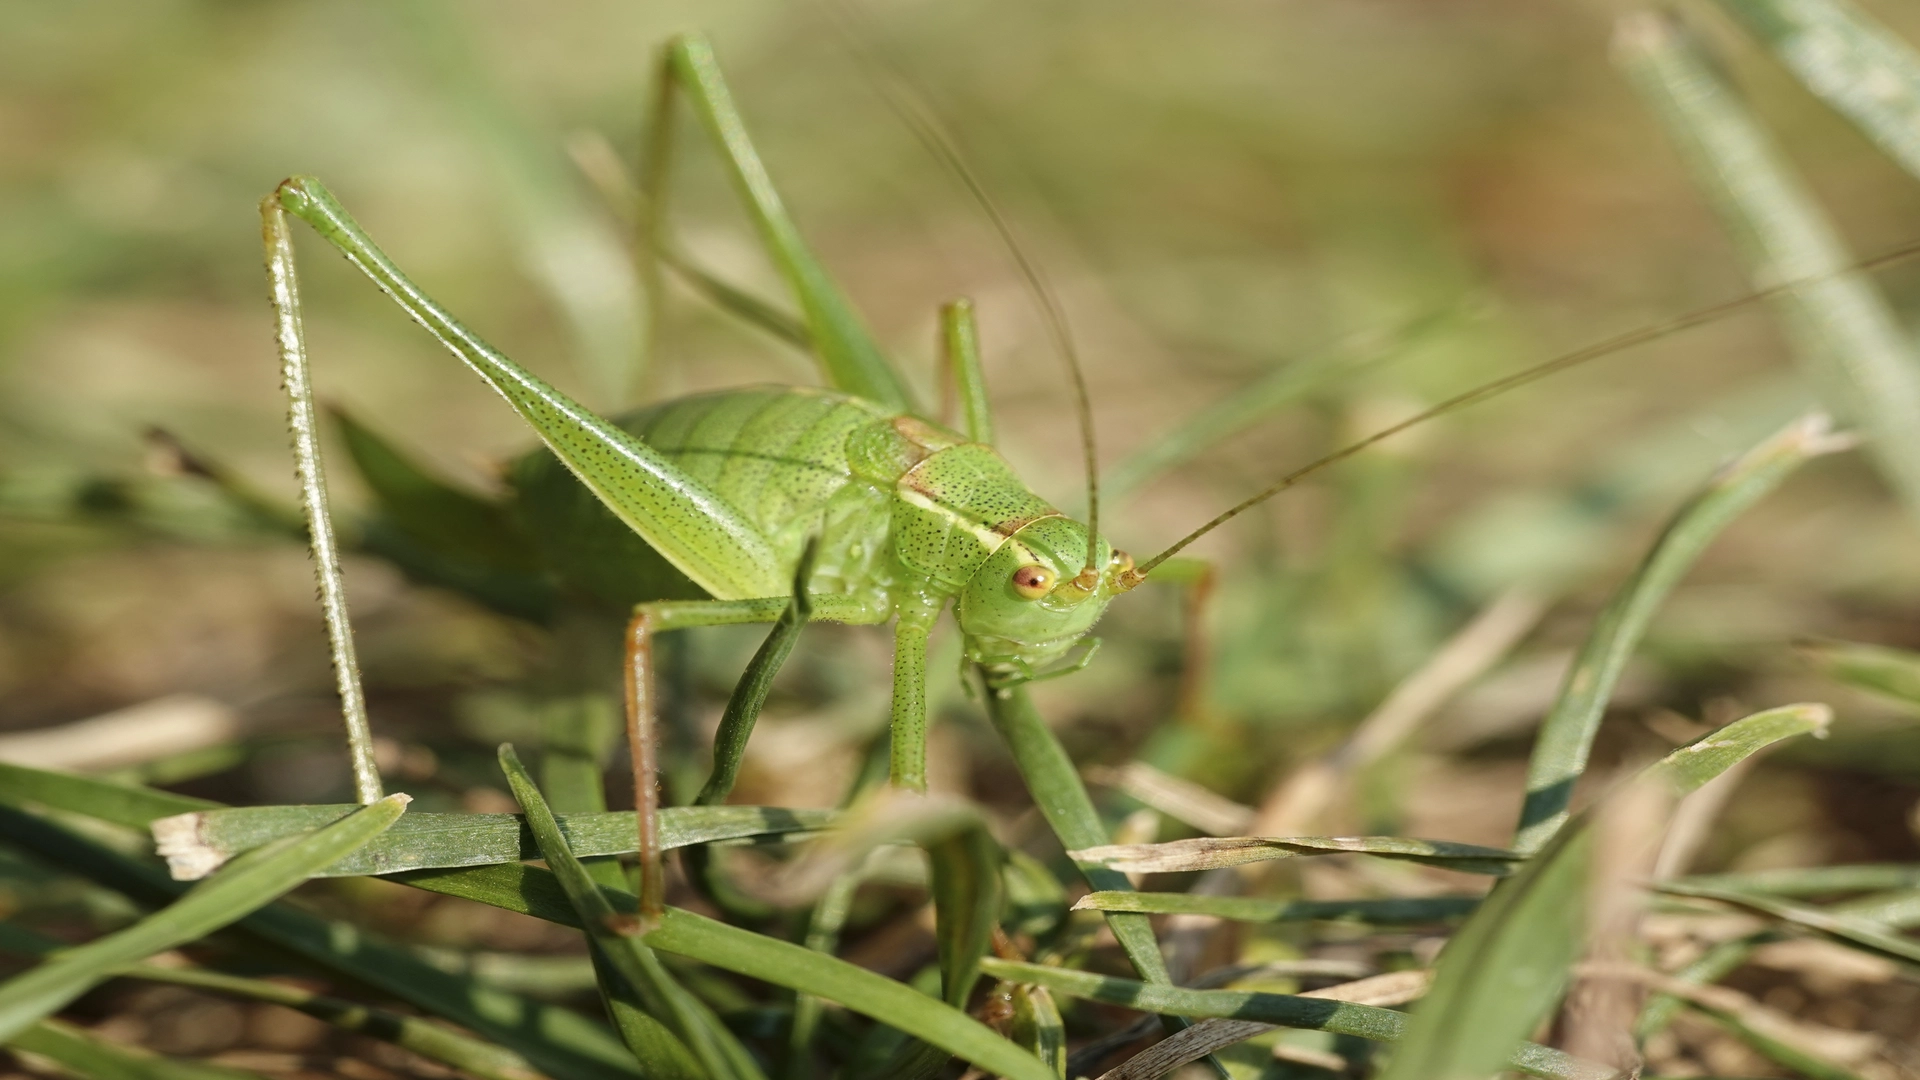 crickets in basement: green cricket on grass